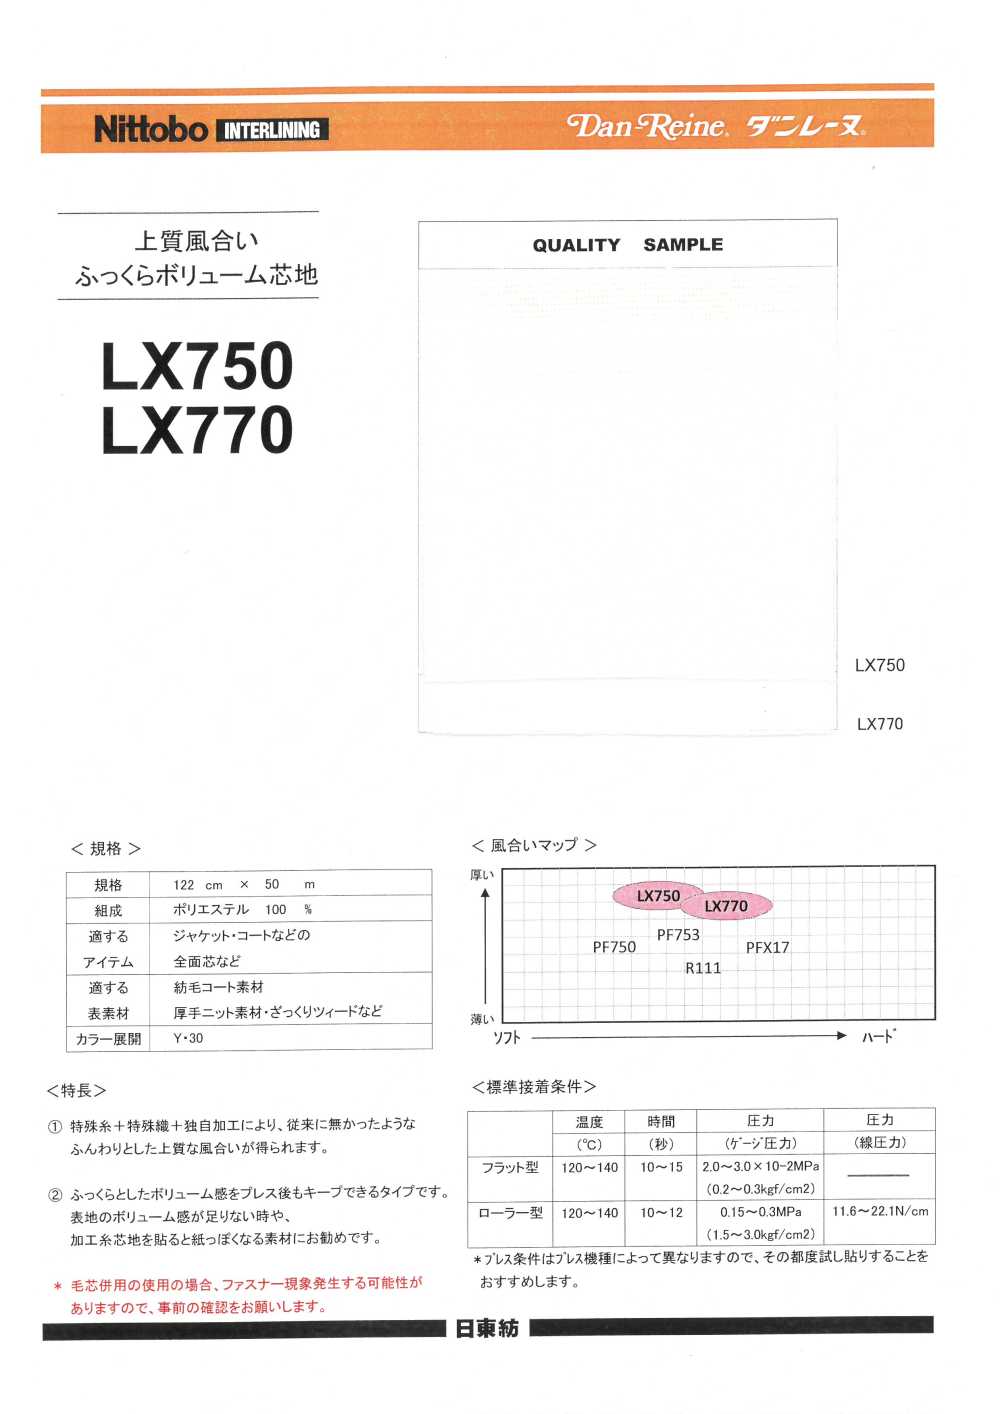 LX750 粘合衬，优质质感，衬布丰满丰盈 日东纺绩